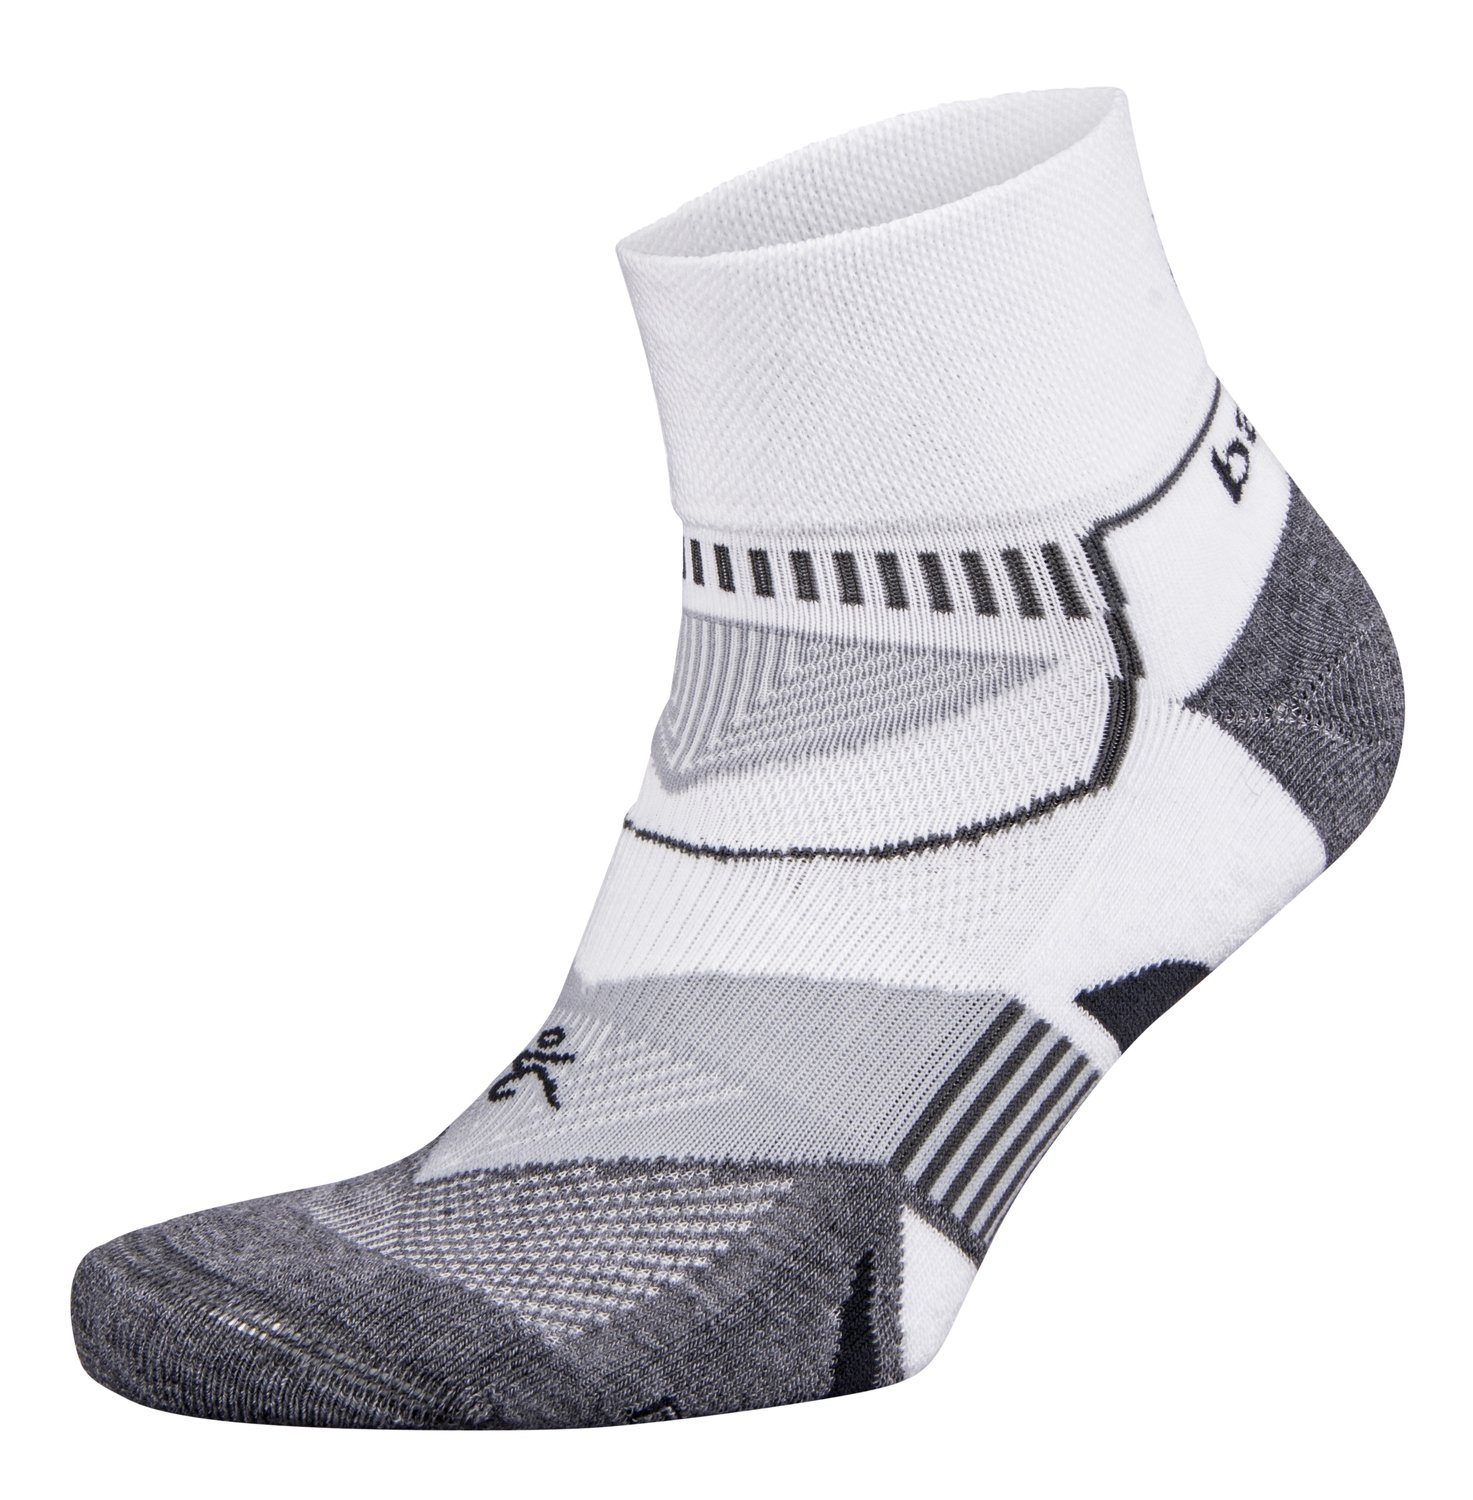 Enduro Quarter Socks White/Grey